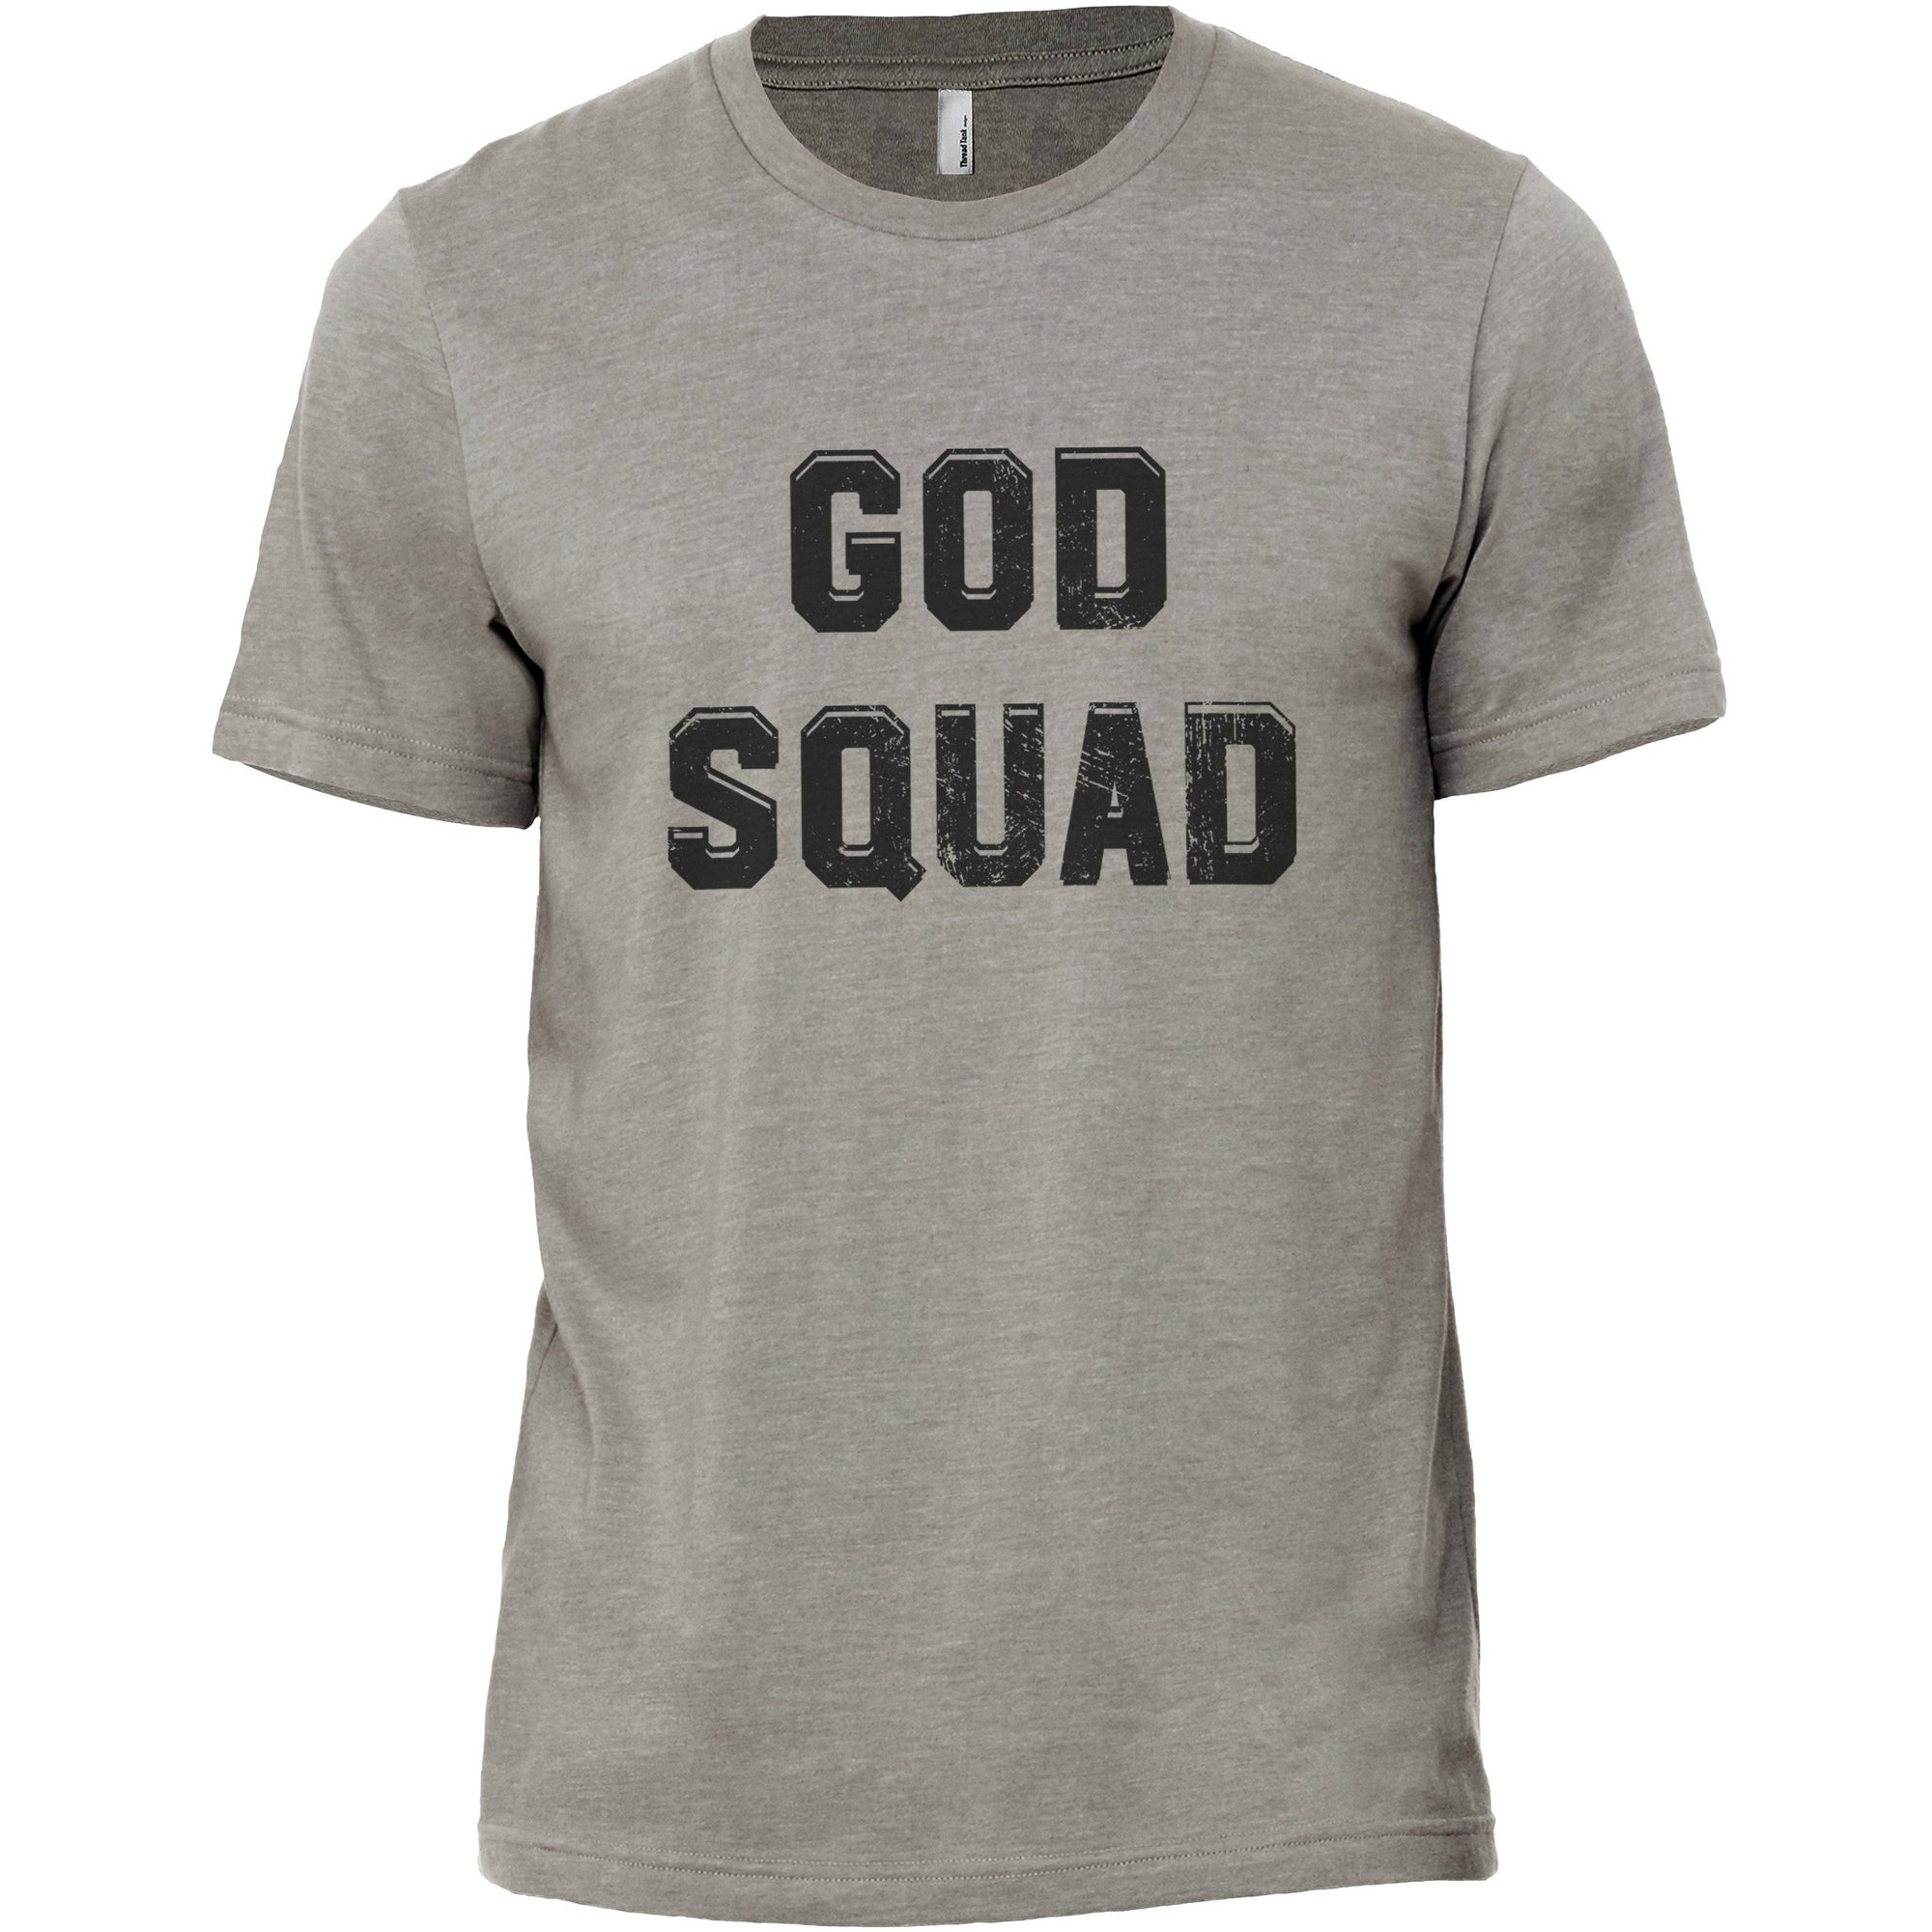 God Squad Military Grey Printed Graphic Men's Crew T-Shirt Tee